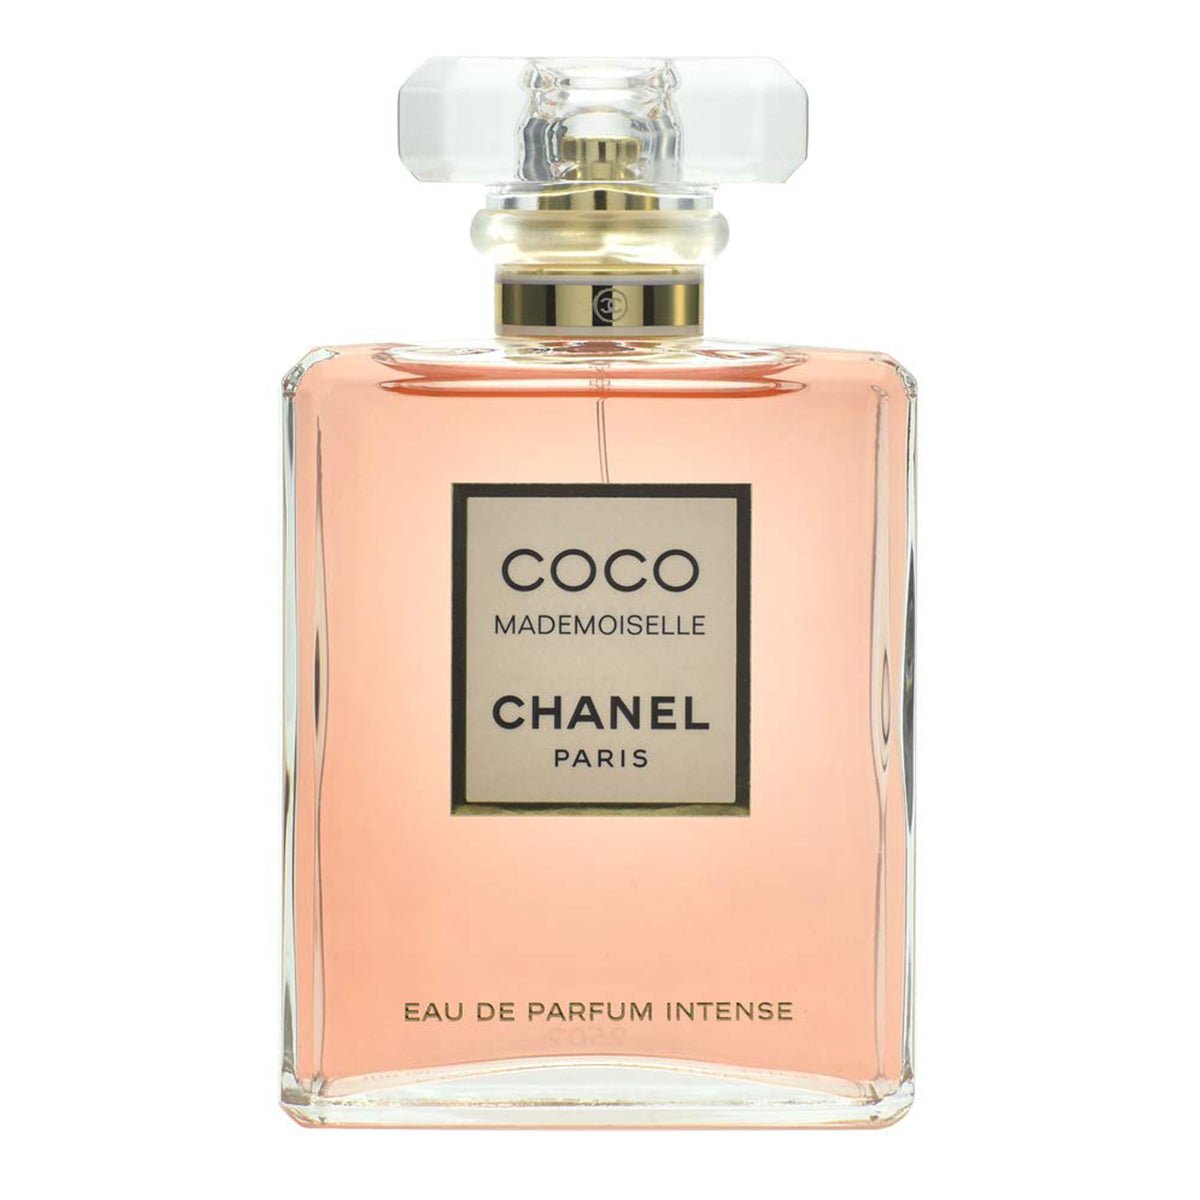 Buy Chanel Perfume Price in Pakistan - Allurebeauty – Allurebeautypk